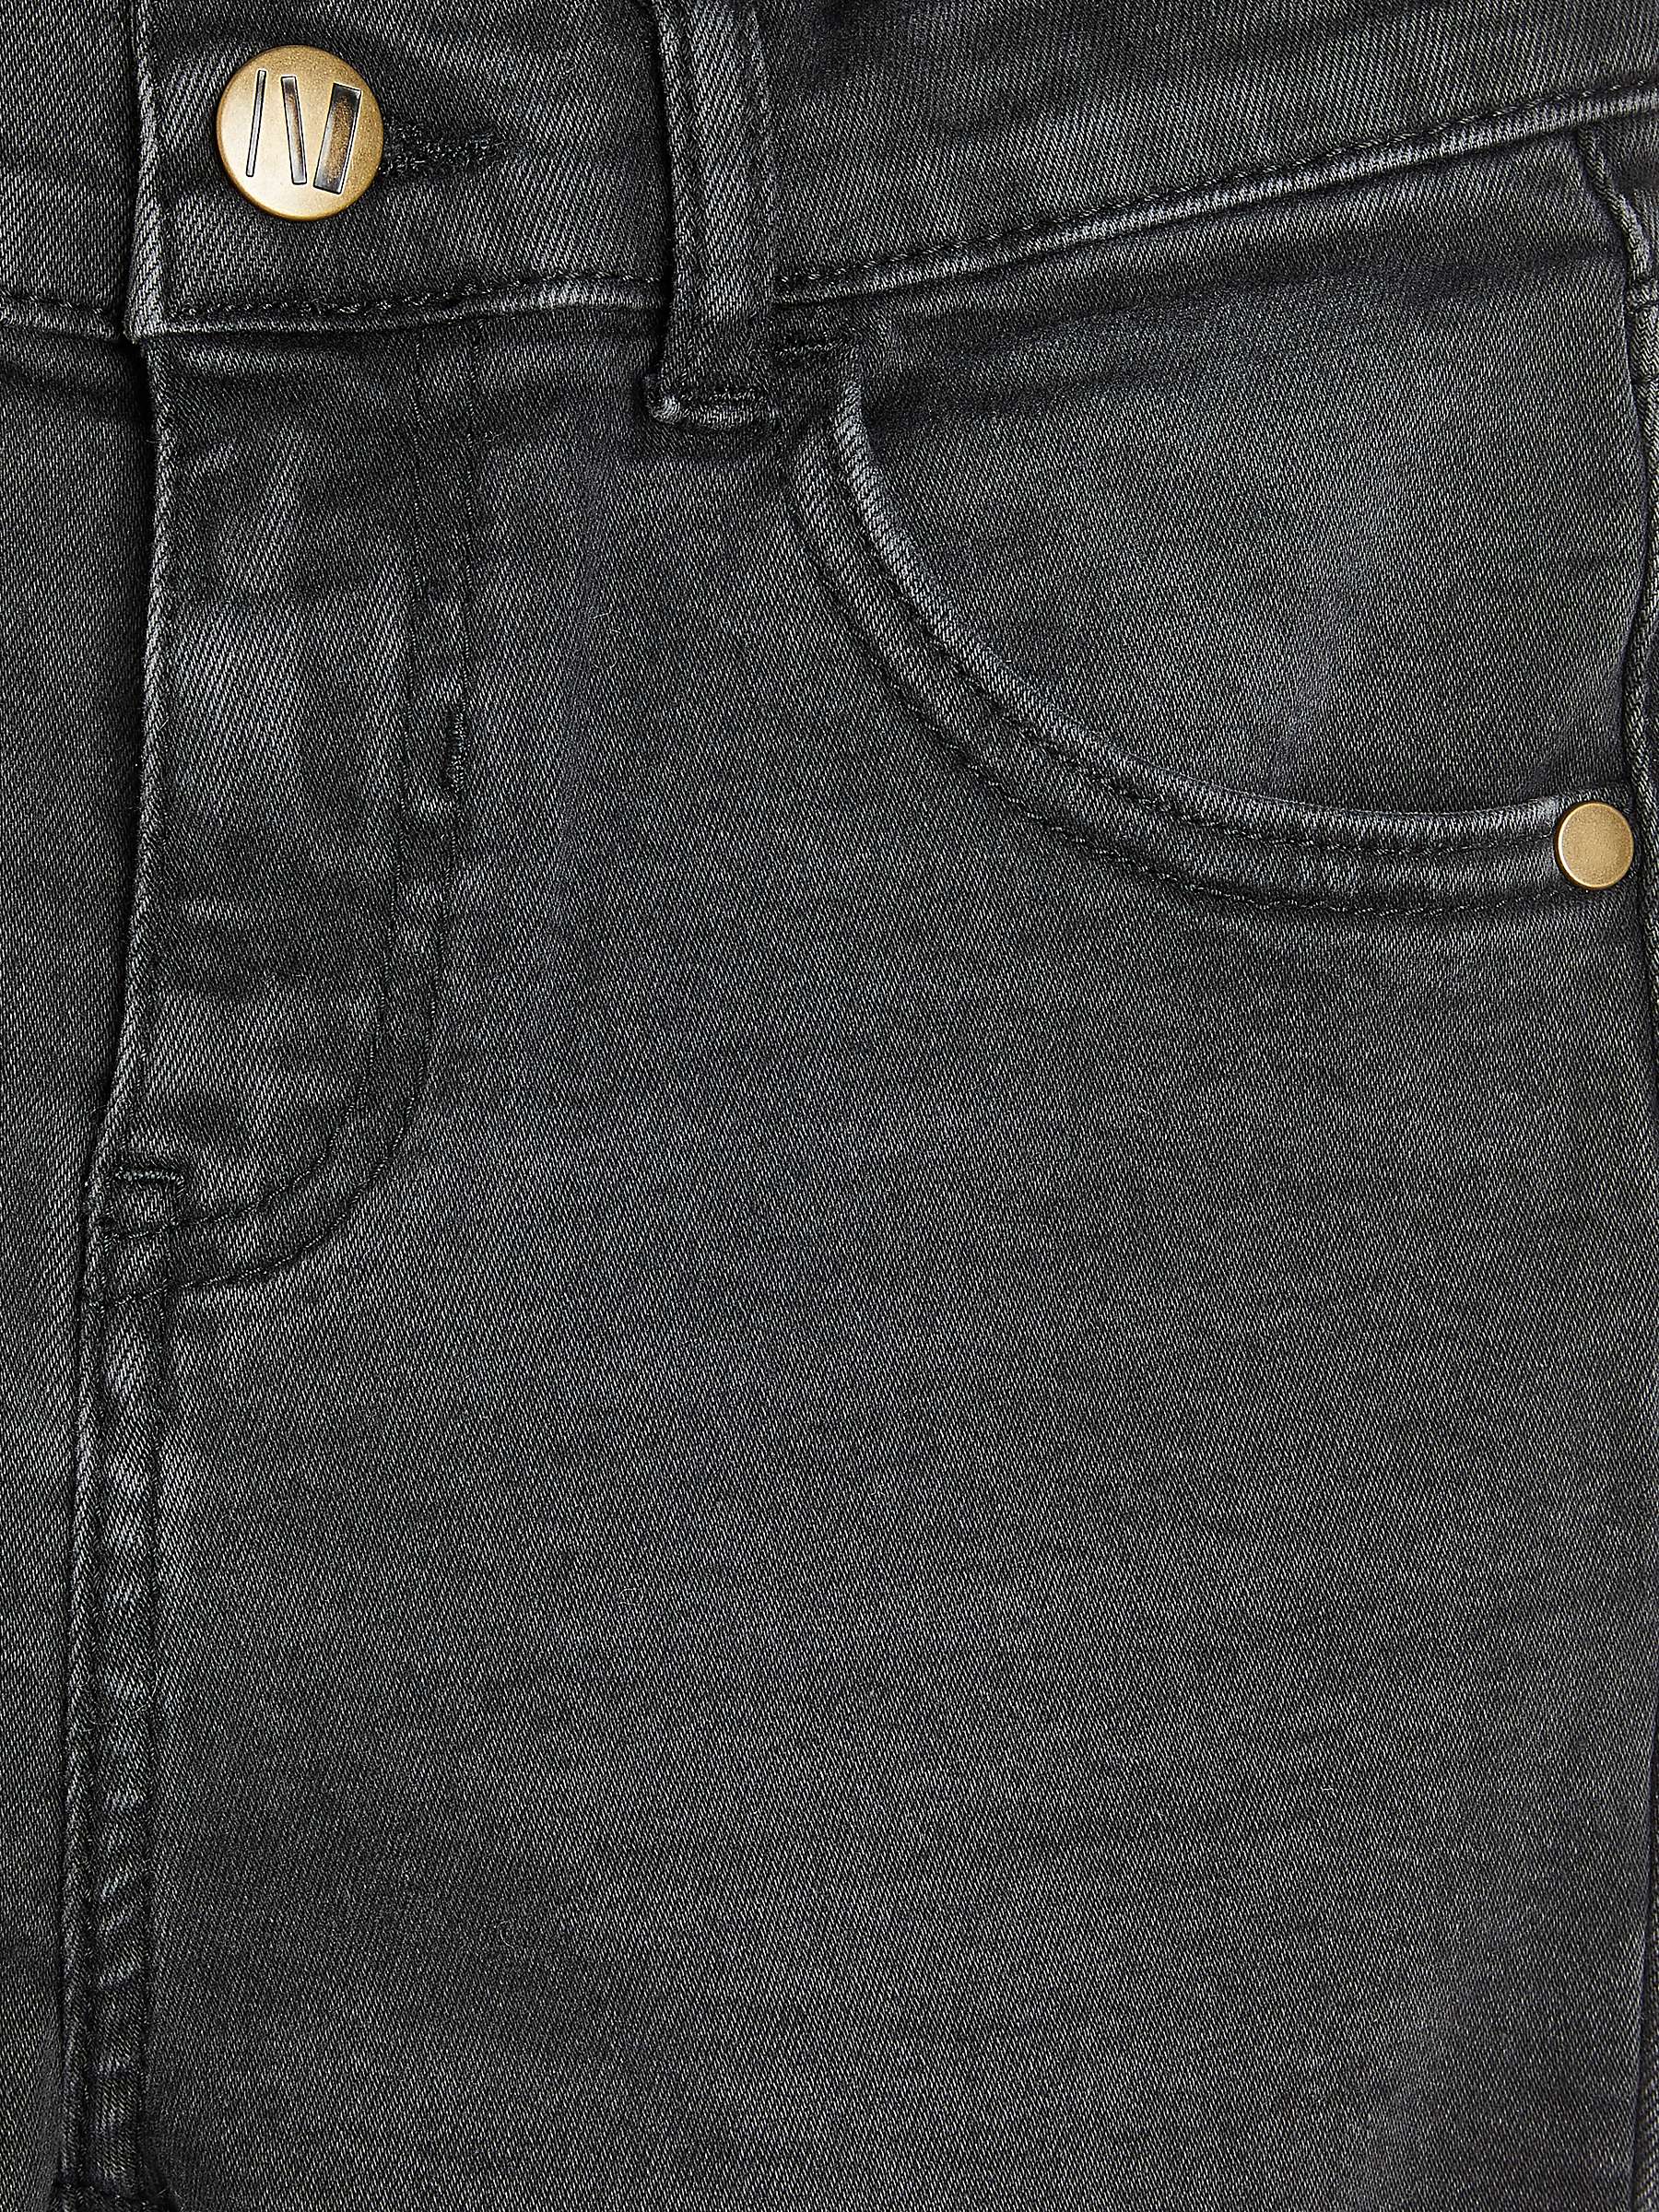 Buy John Lewis Boys' Skinny Denim Jeans, Black Online at johnlewis.com